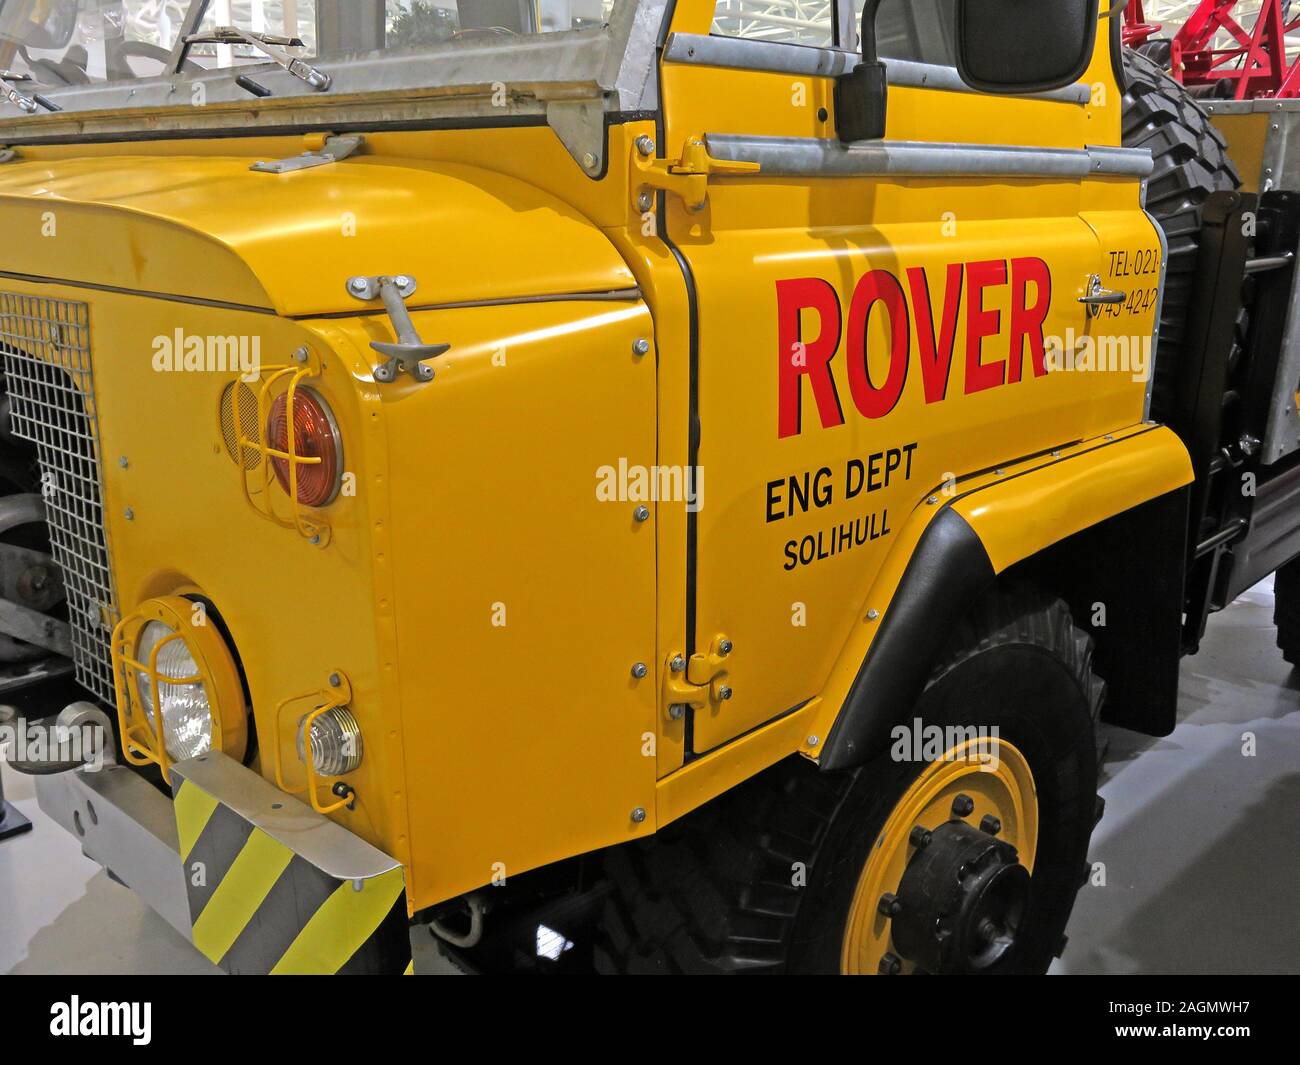 Rover Engineering Department, Yellow Rover Engineering Dep Solihull Truck, Rover eng Abt., Bergung Fahrzeug Stockfoto